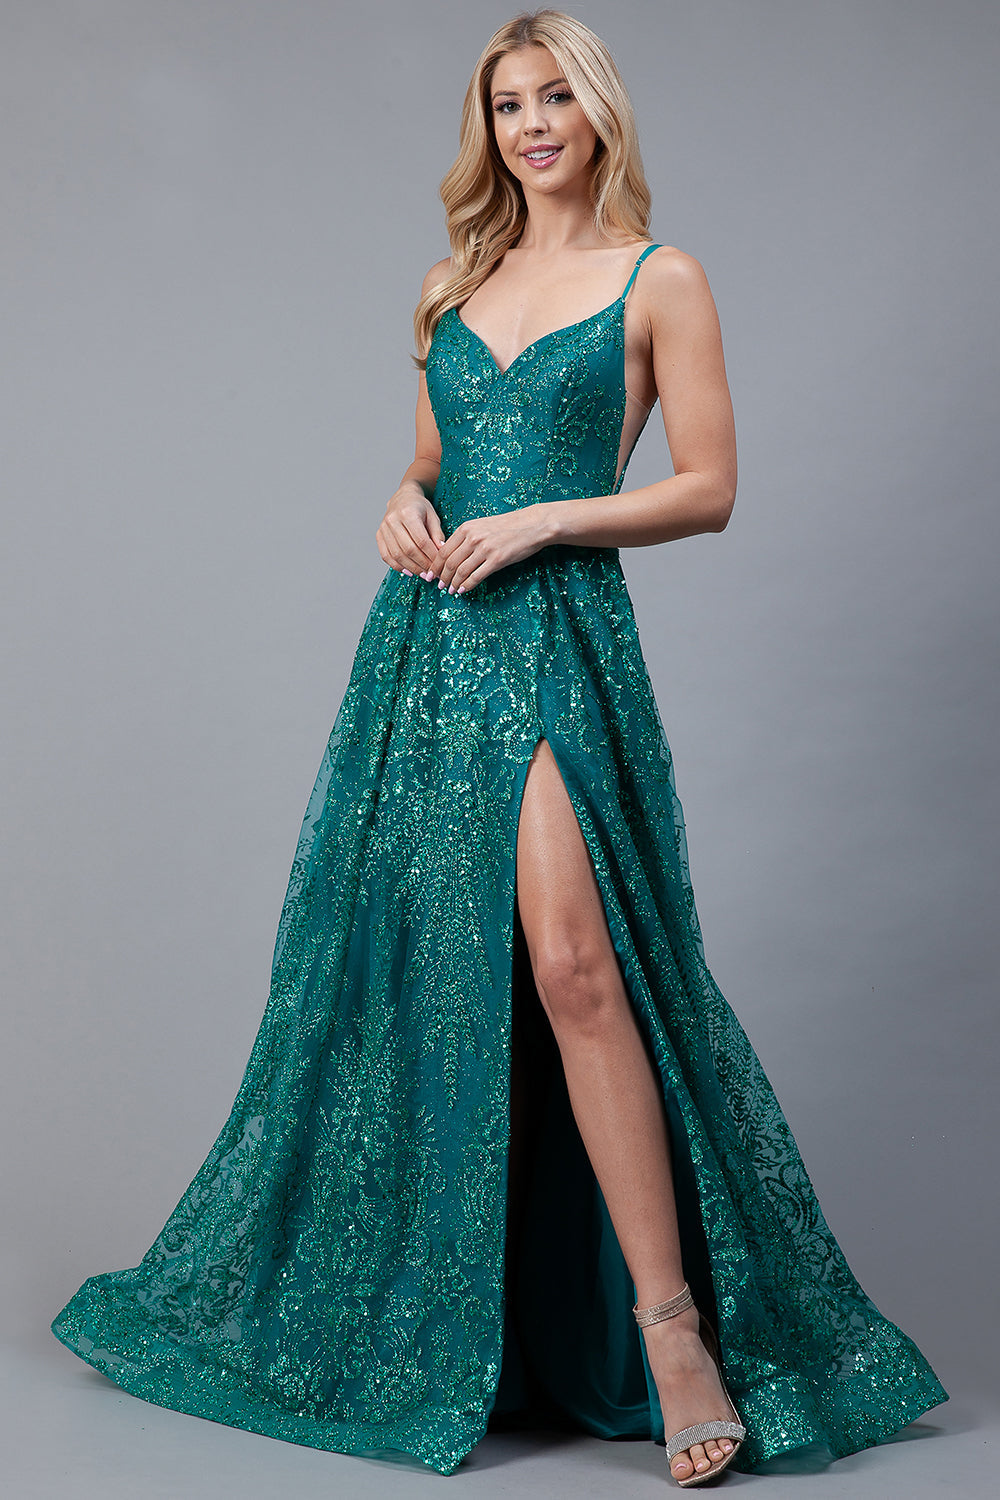 Glitter Embroidererd Lace Side Slit Open V-Back Long Prom Dress ACEL010-3